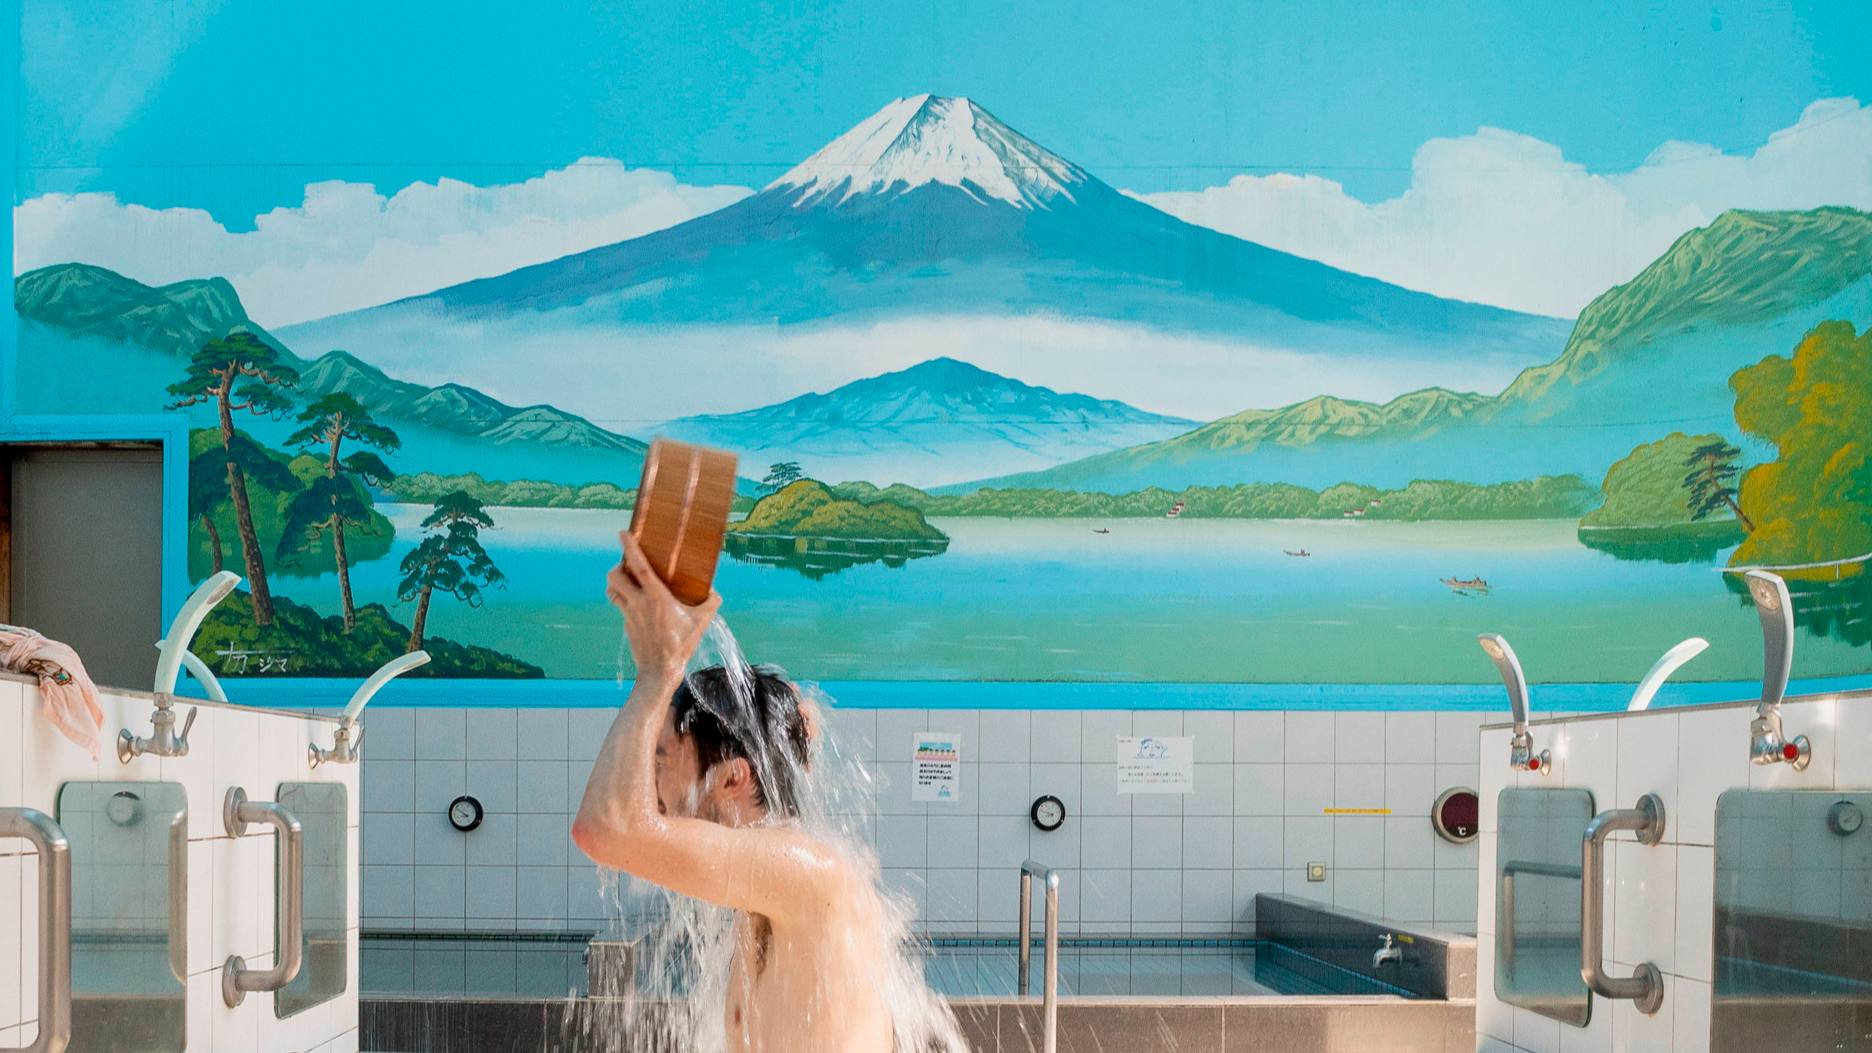 diamond sydney recommends japanese public bath video pic